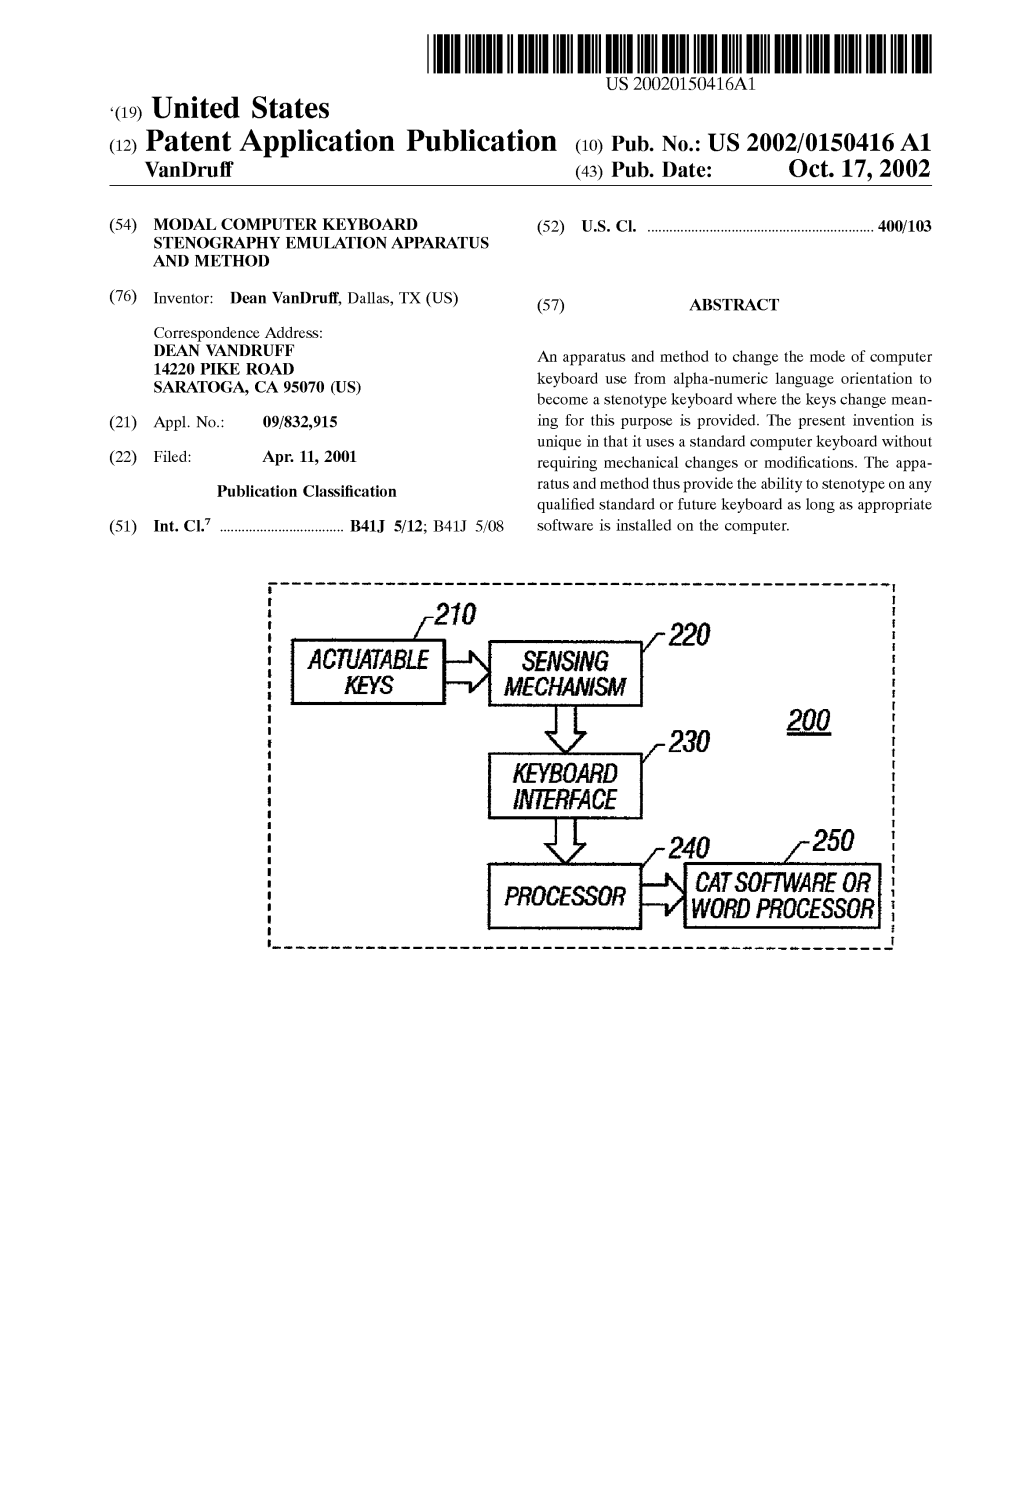 (12) Patent Application Publication (10) Pub. No.: US 2002/0150416A1 Vandruff (43) Pub